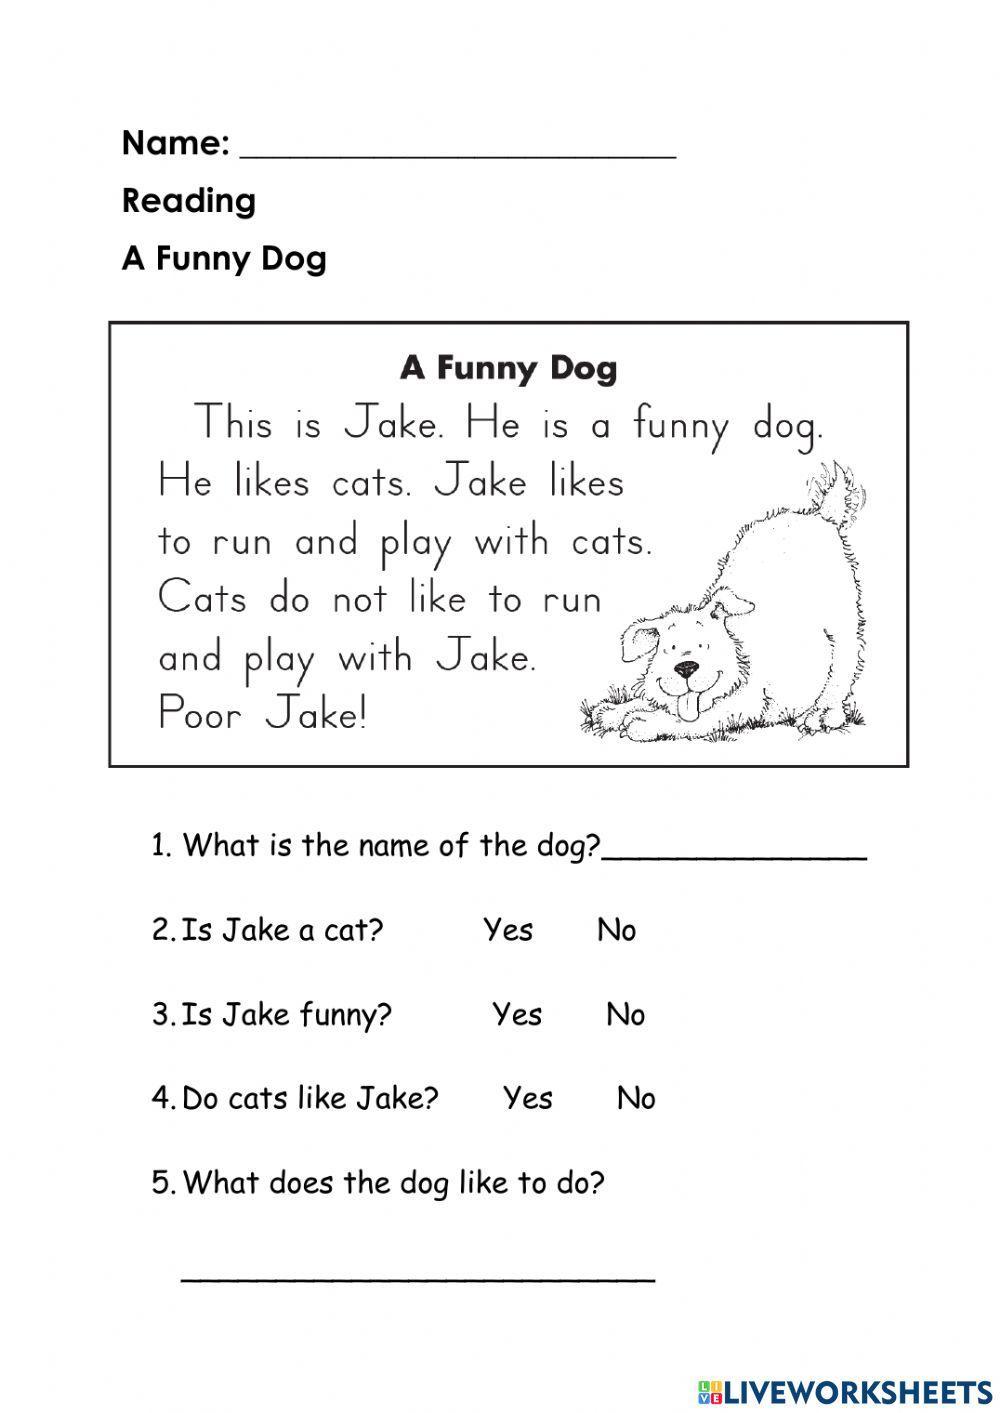 Jake the Funny Dog